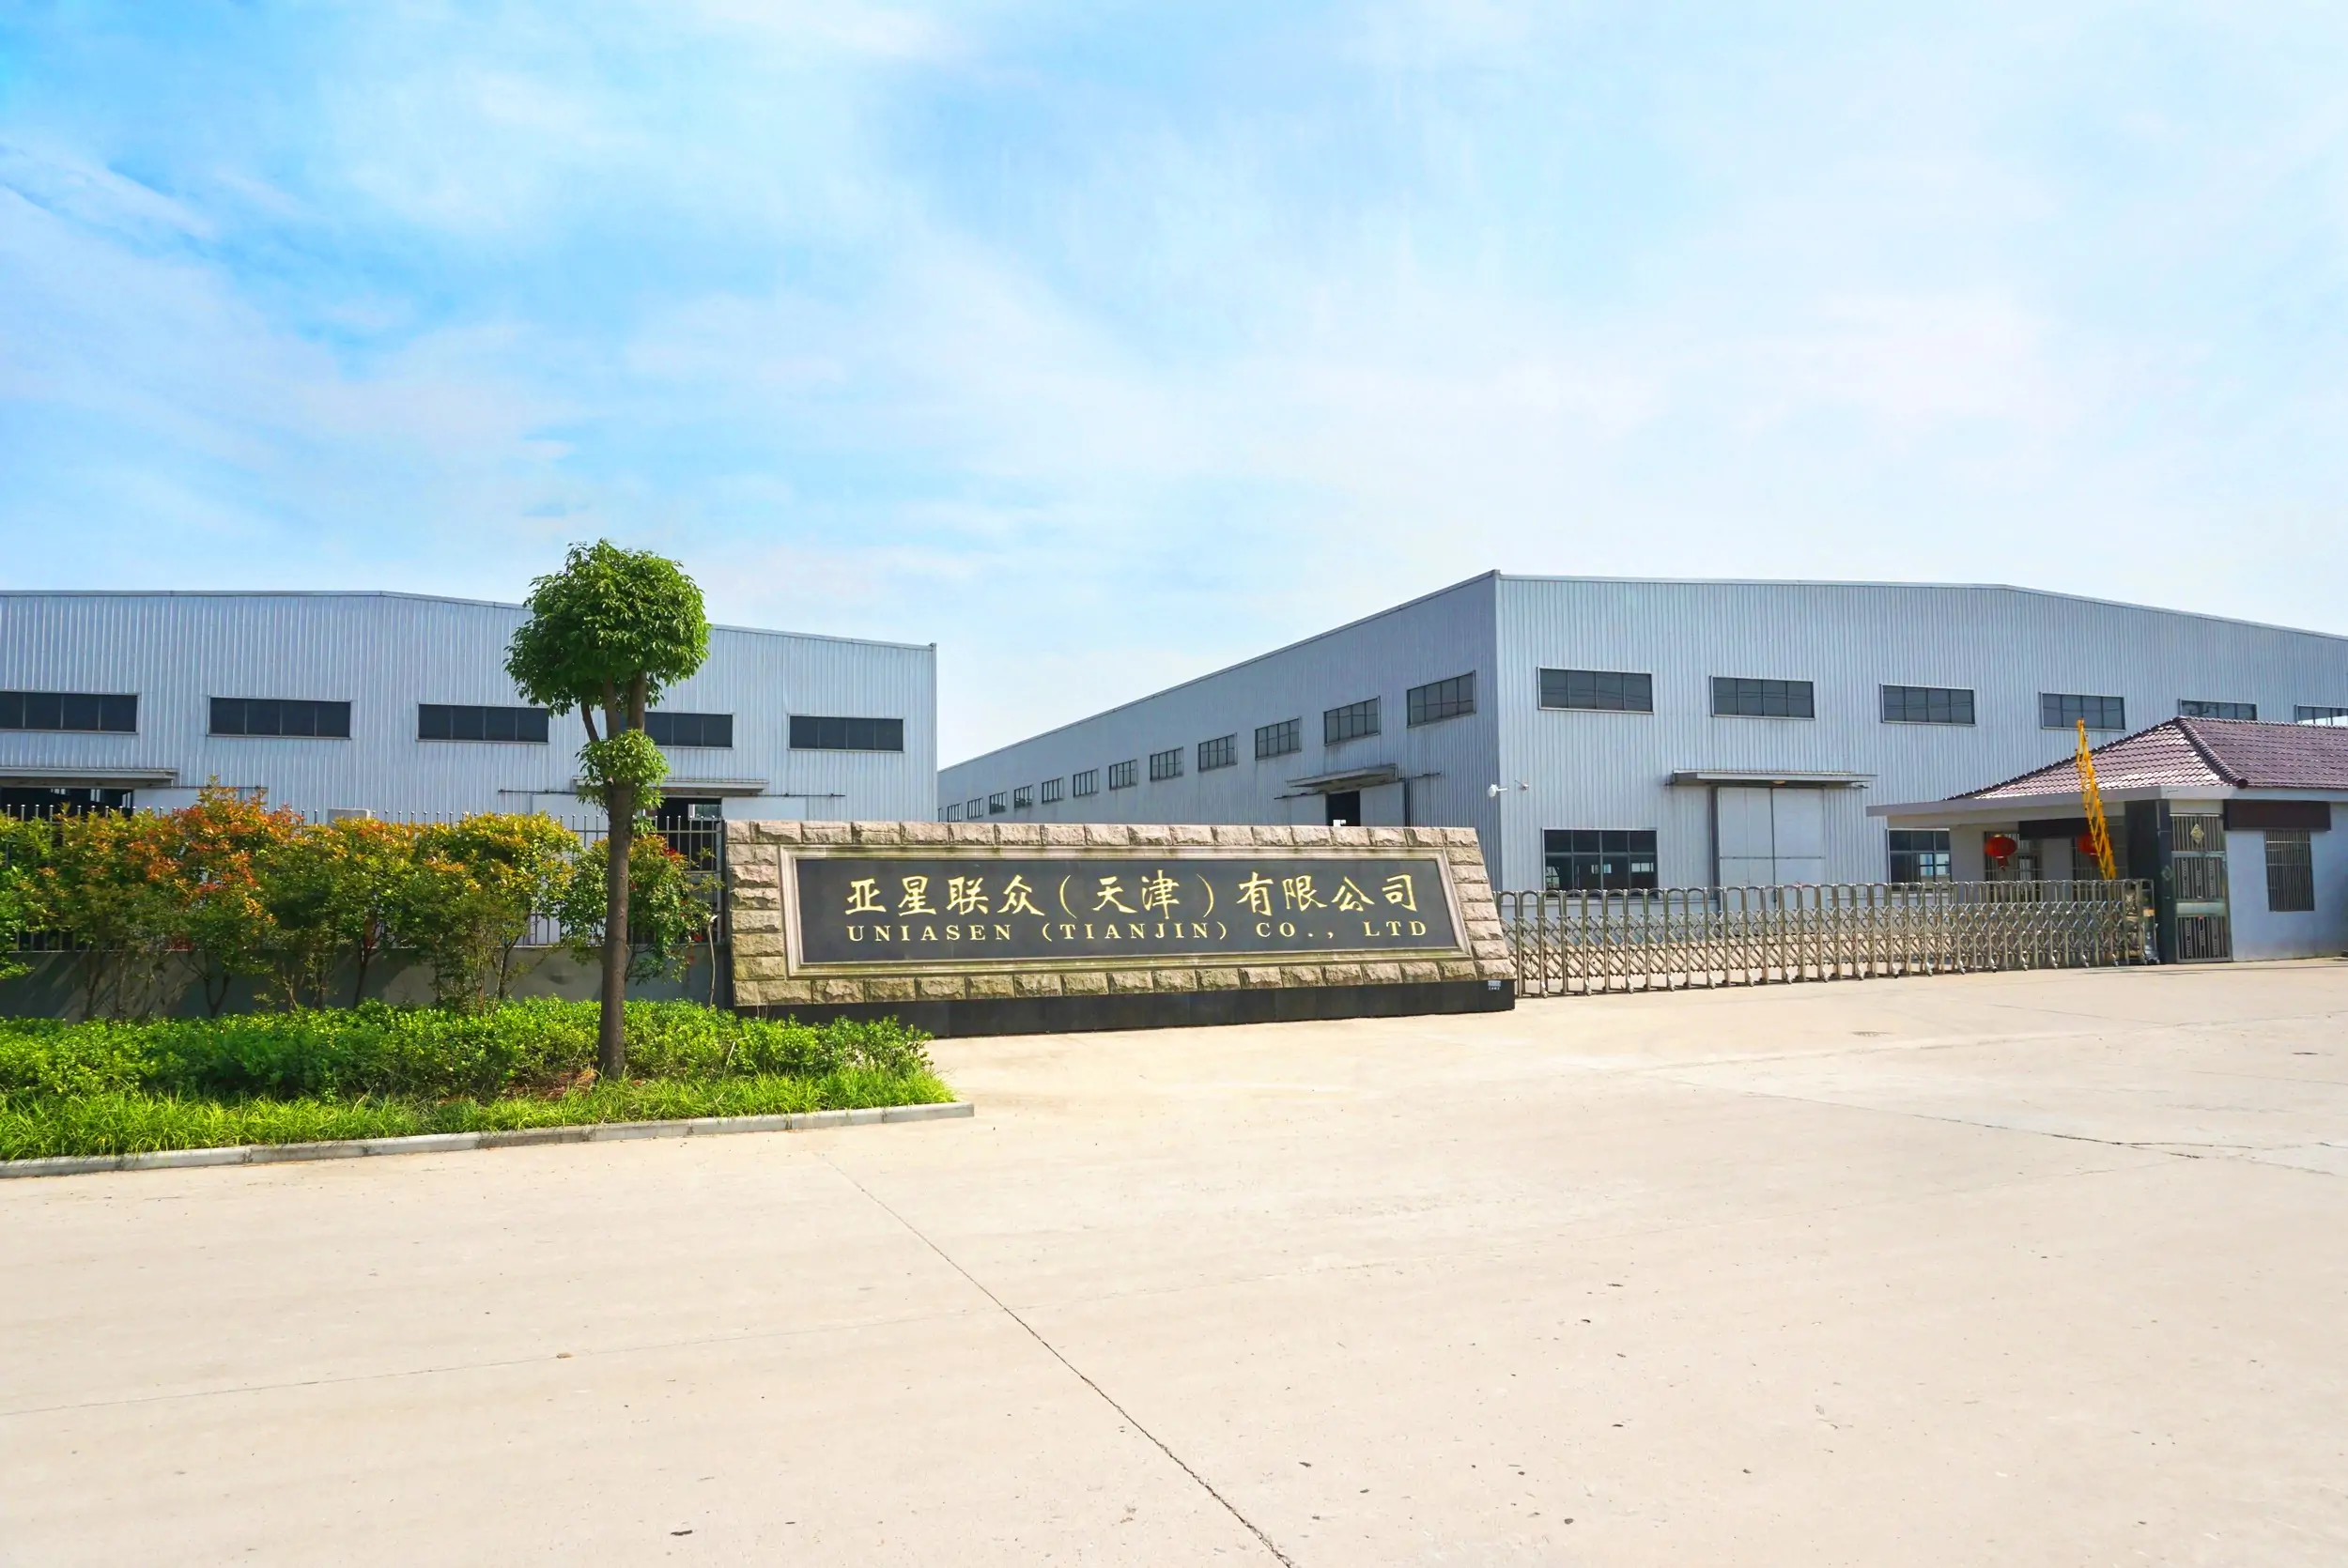 UNIASEN factory gate